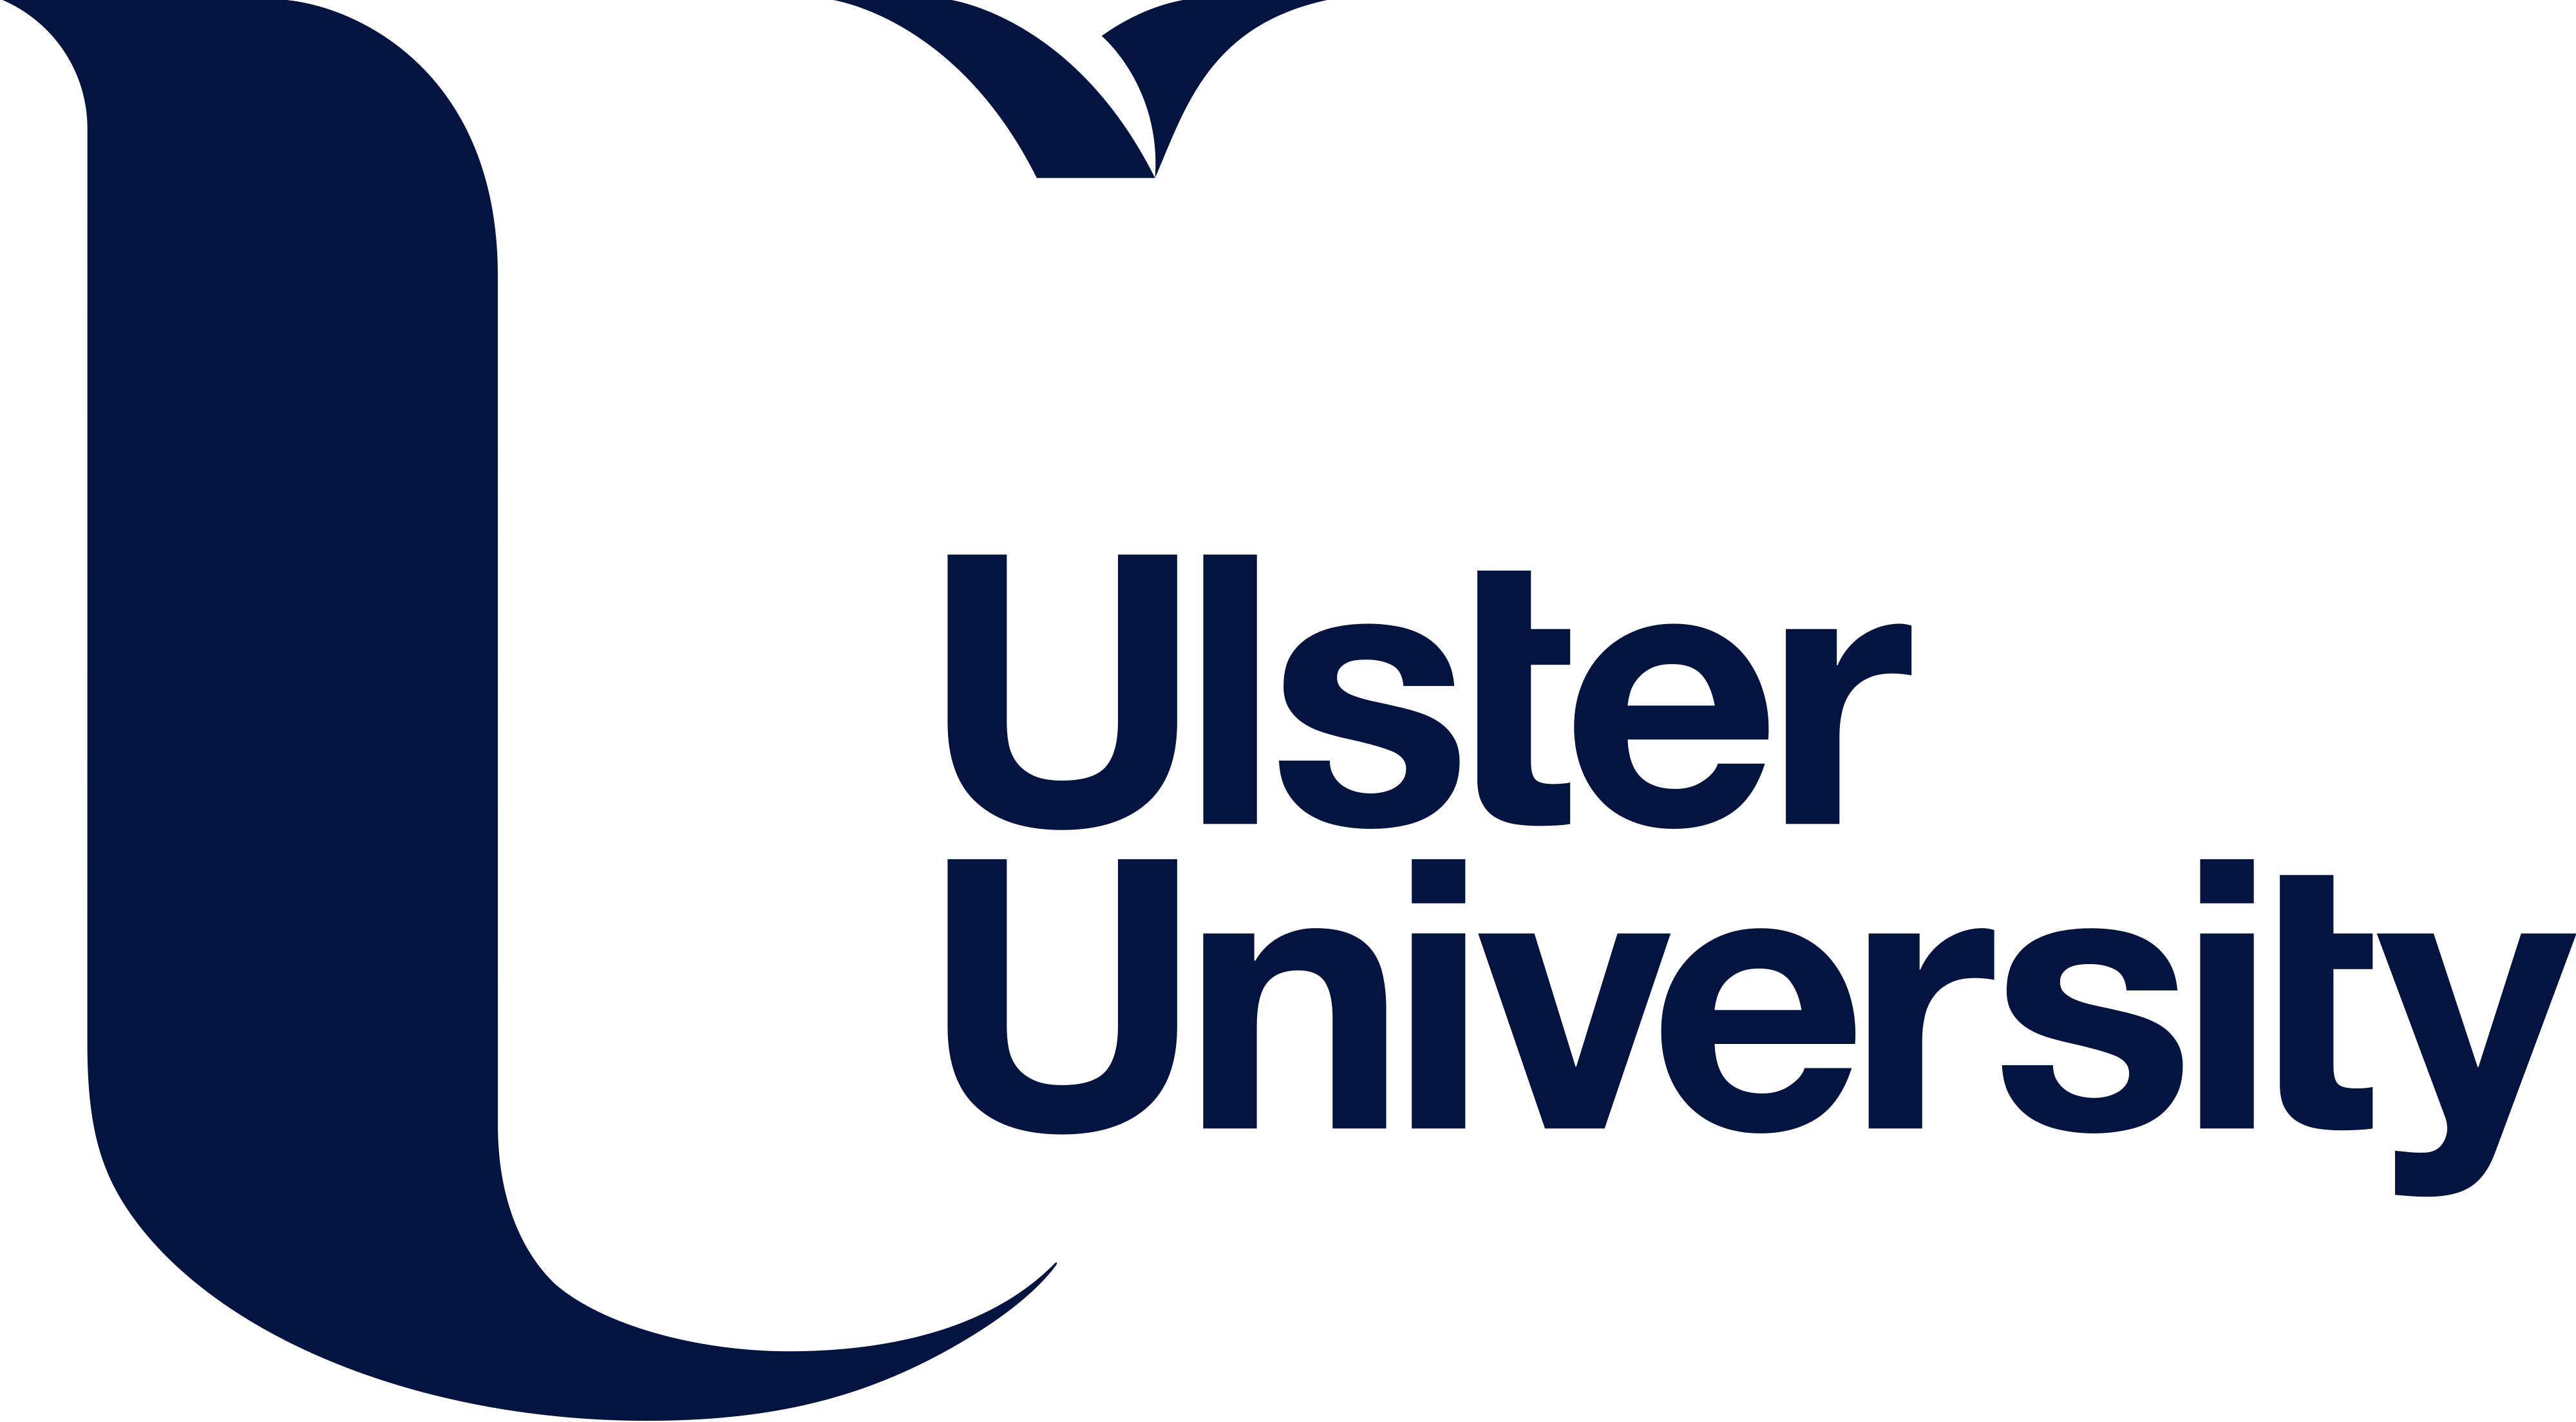 Ulster University logo download.